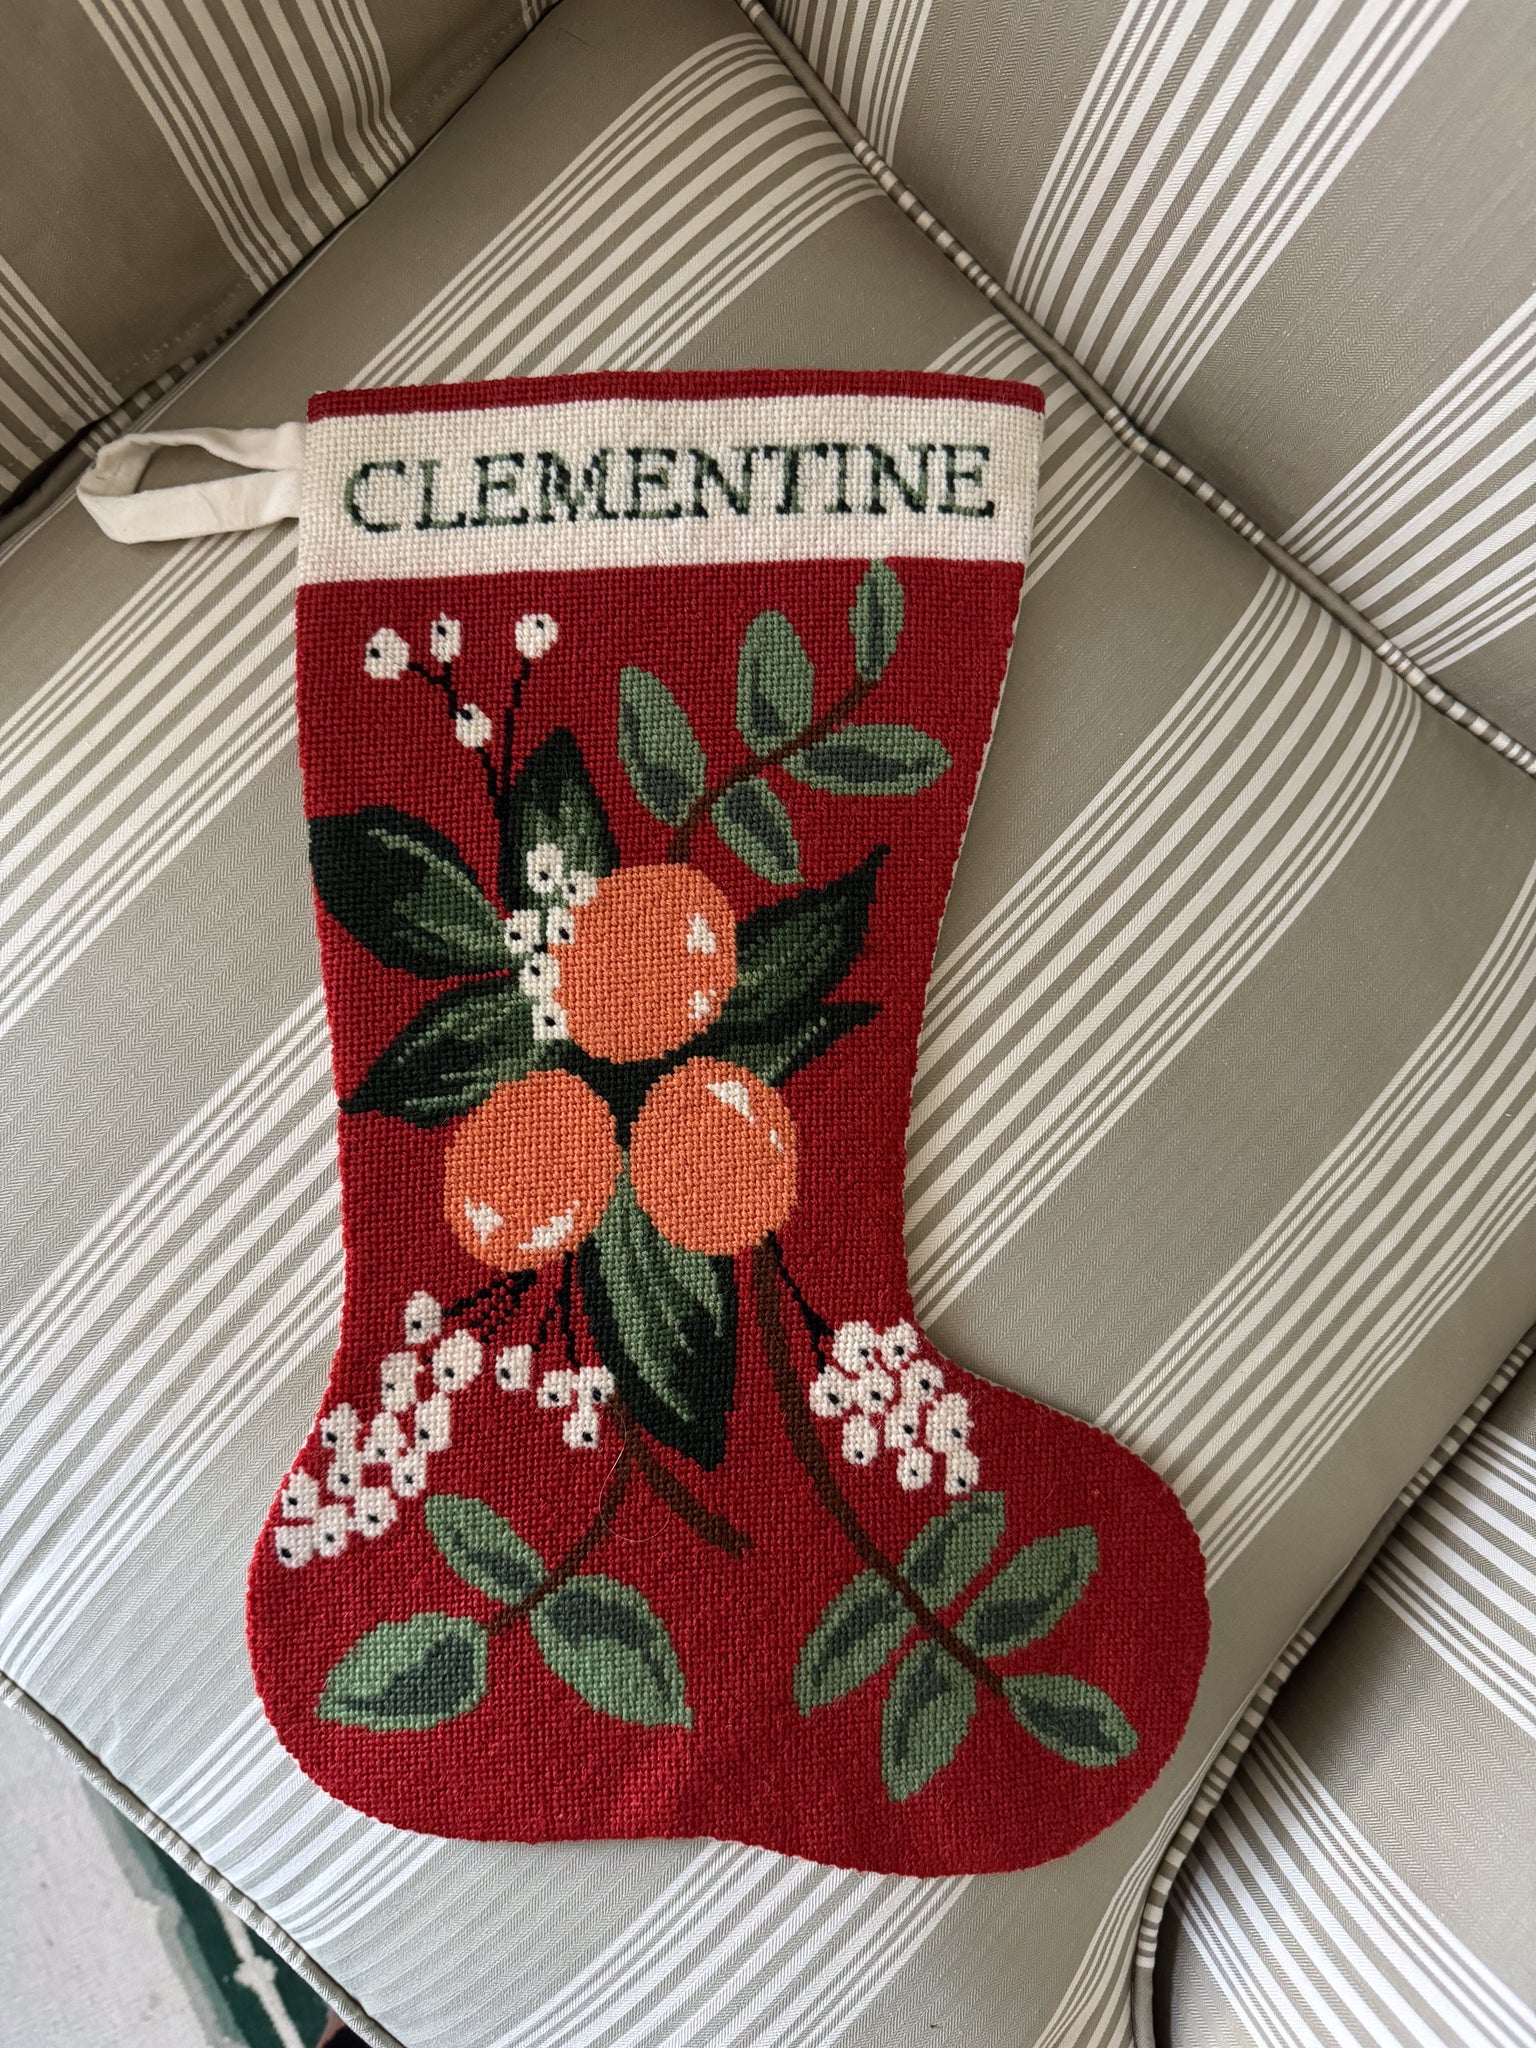 Stitched Stocking - Clementine